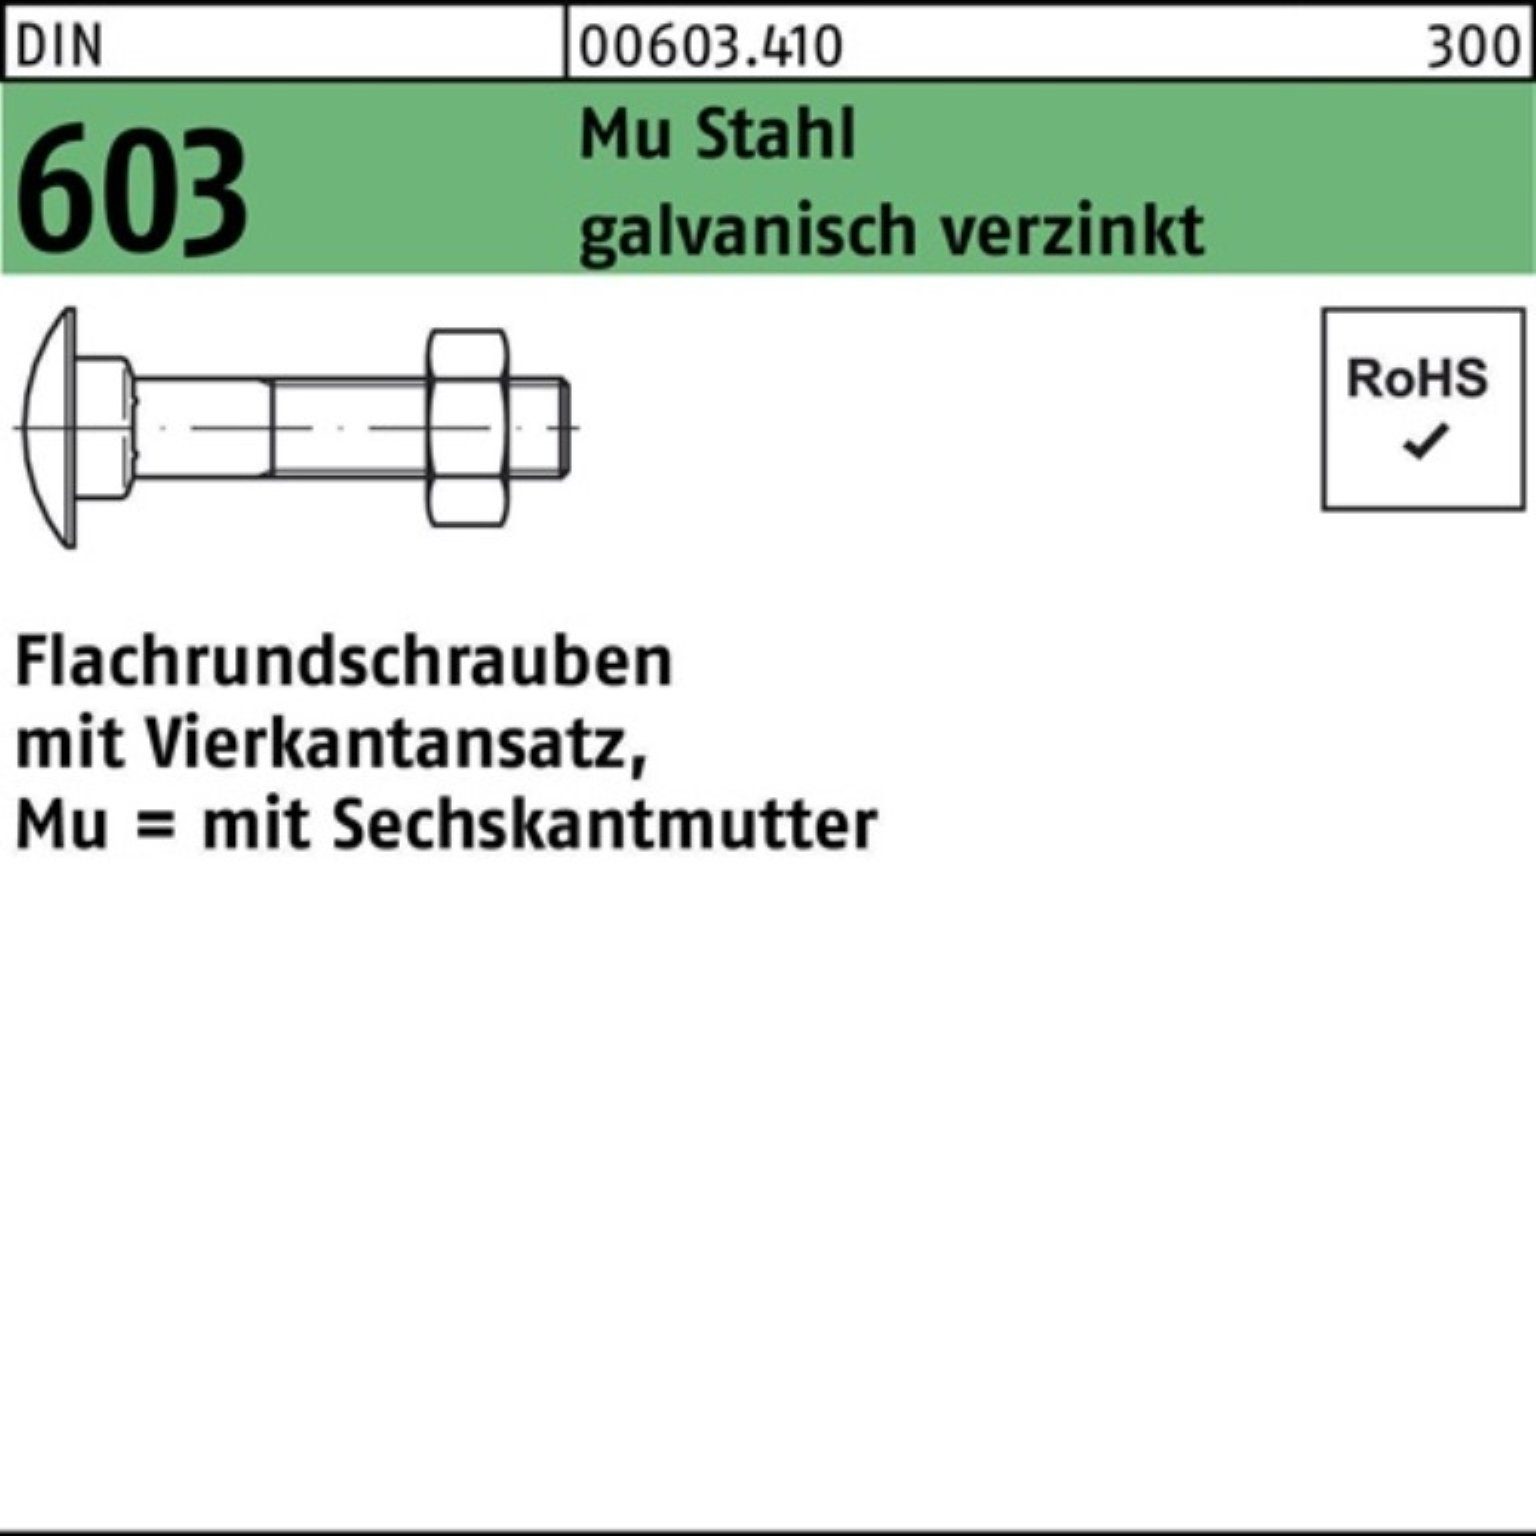 Flachrundschraube M16x340 Vierkantansatz/6-ktmutter DIN Schraube Pack 100er 603 Reyher